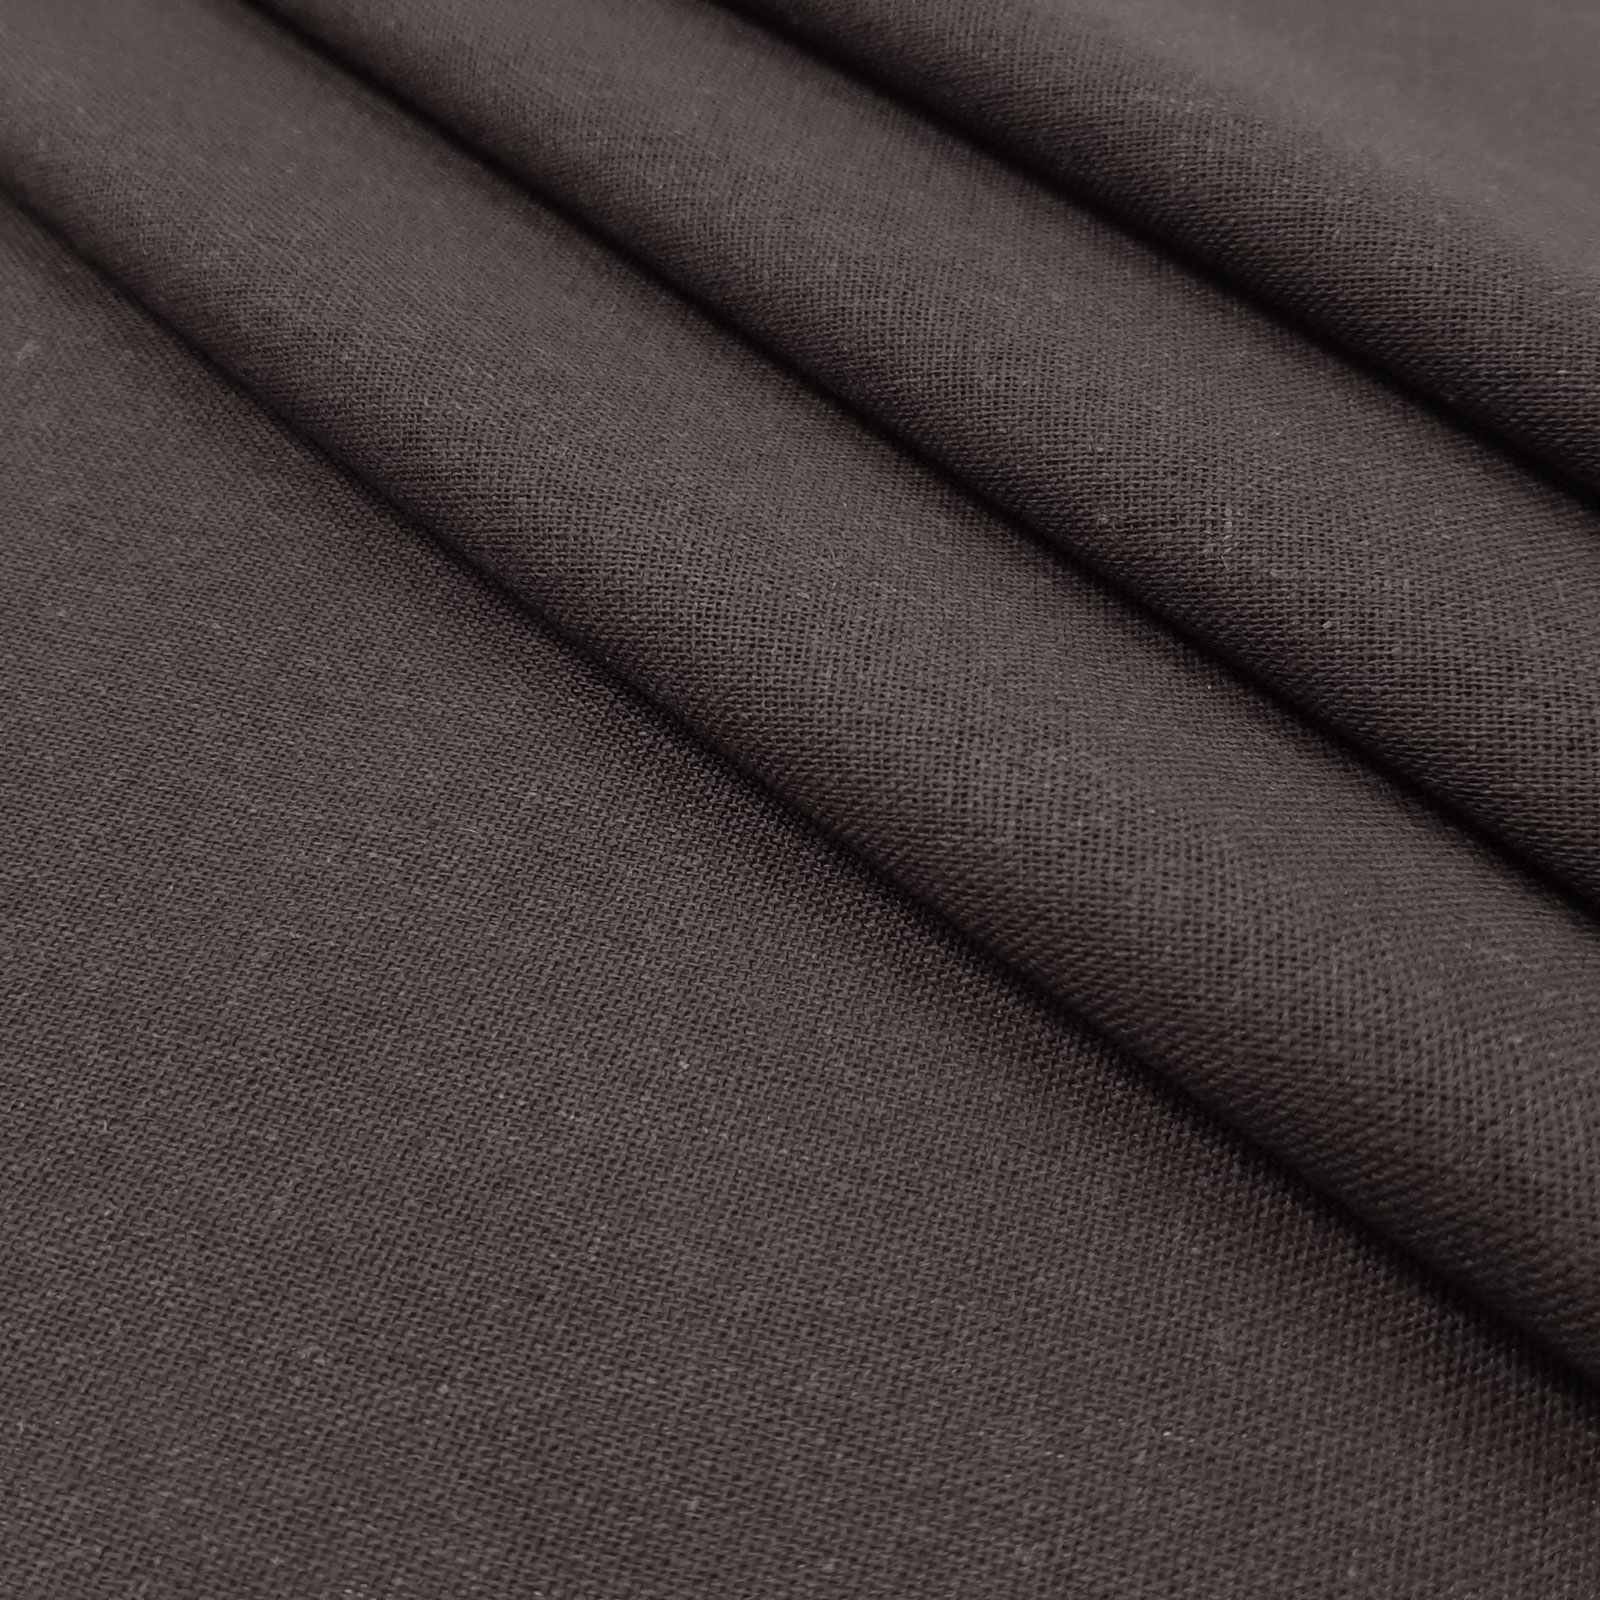 Bella - natural linen cotton fabric - Anthracite